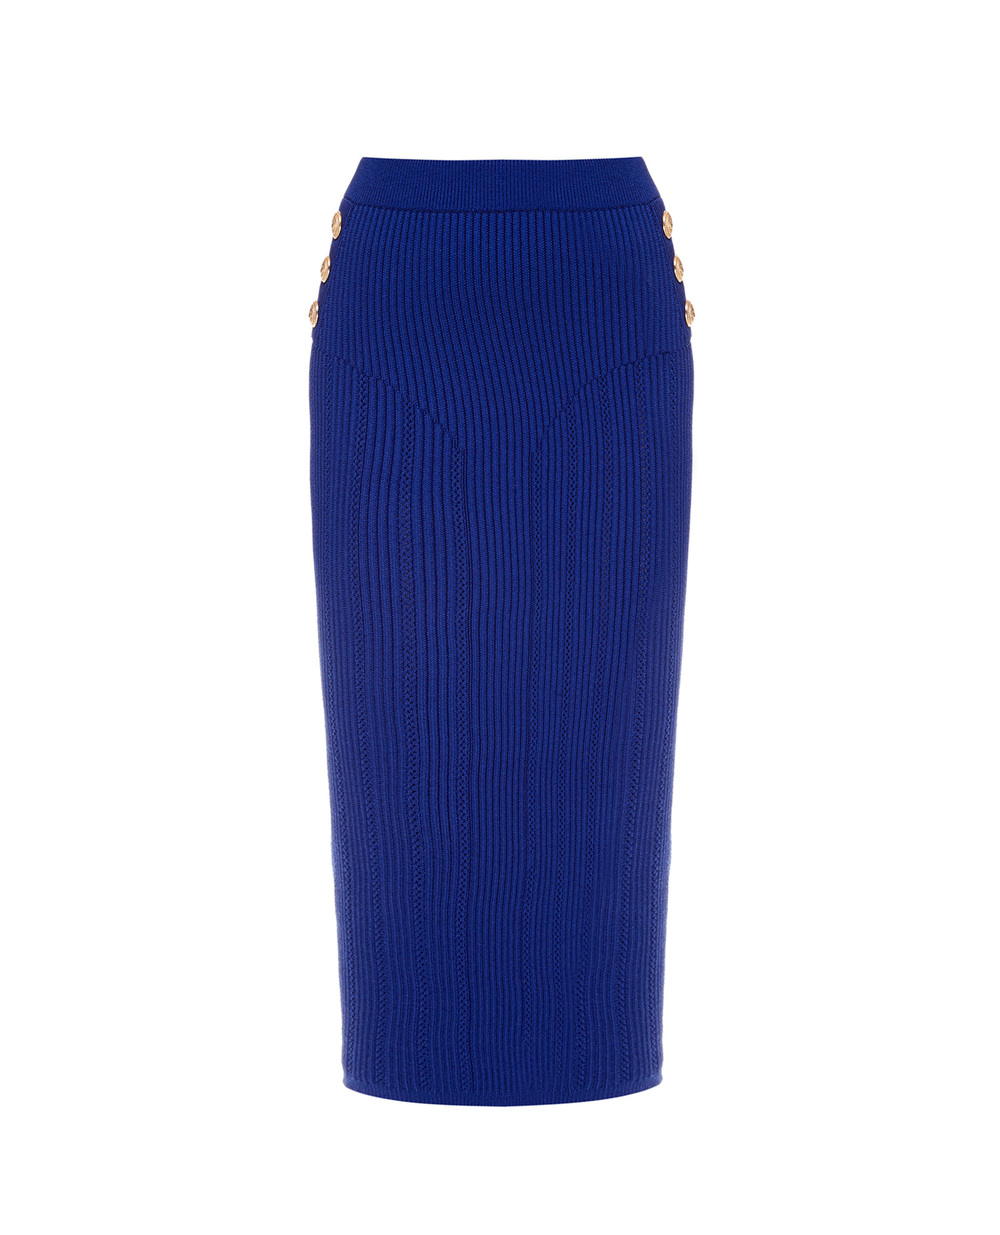 Юбка Balmain XF1LD023KB39-S, синий цвет • Купить в интернет-магазине Kameron